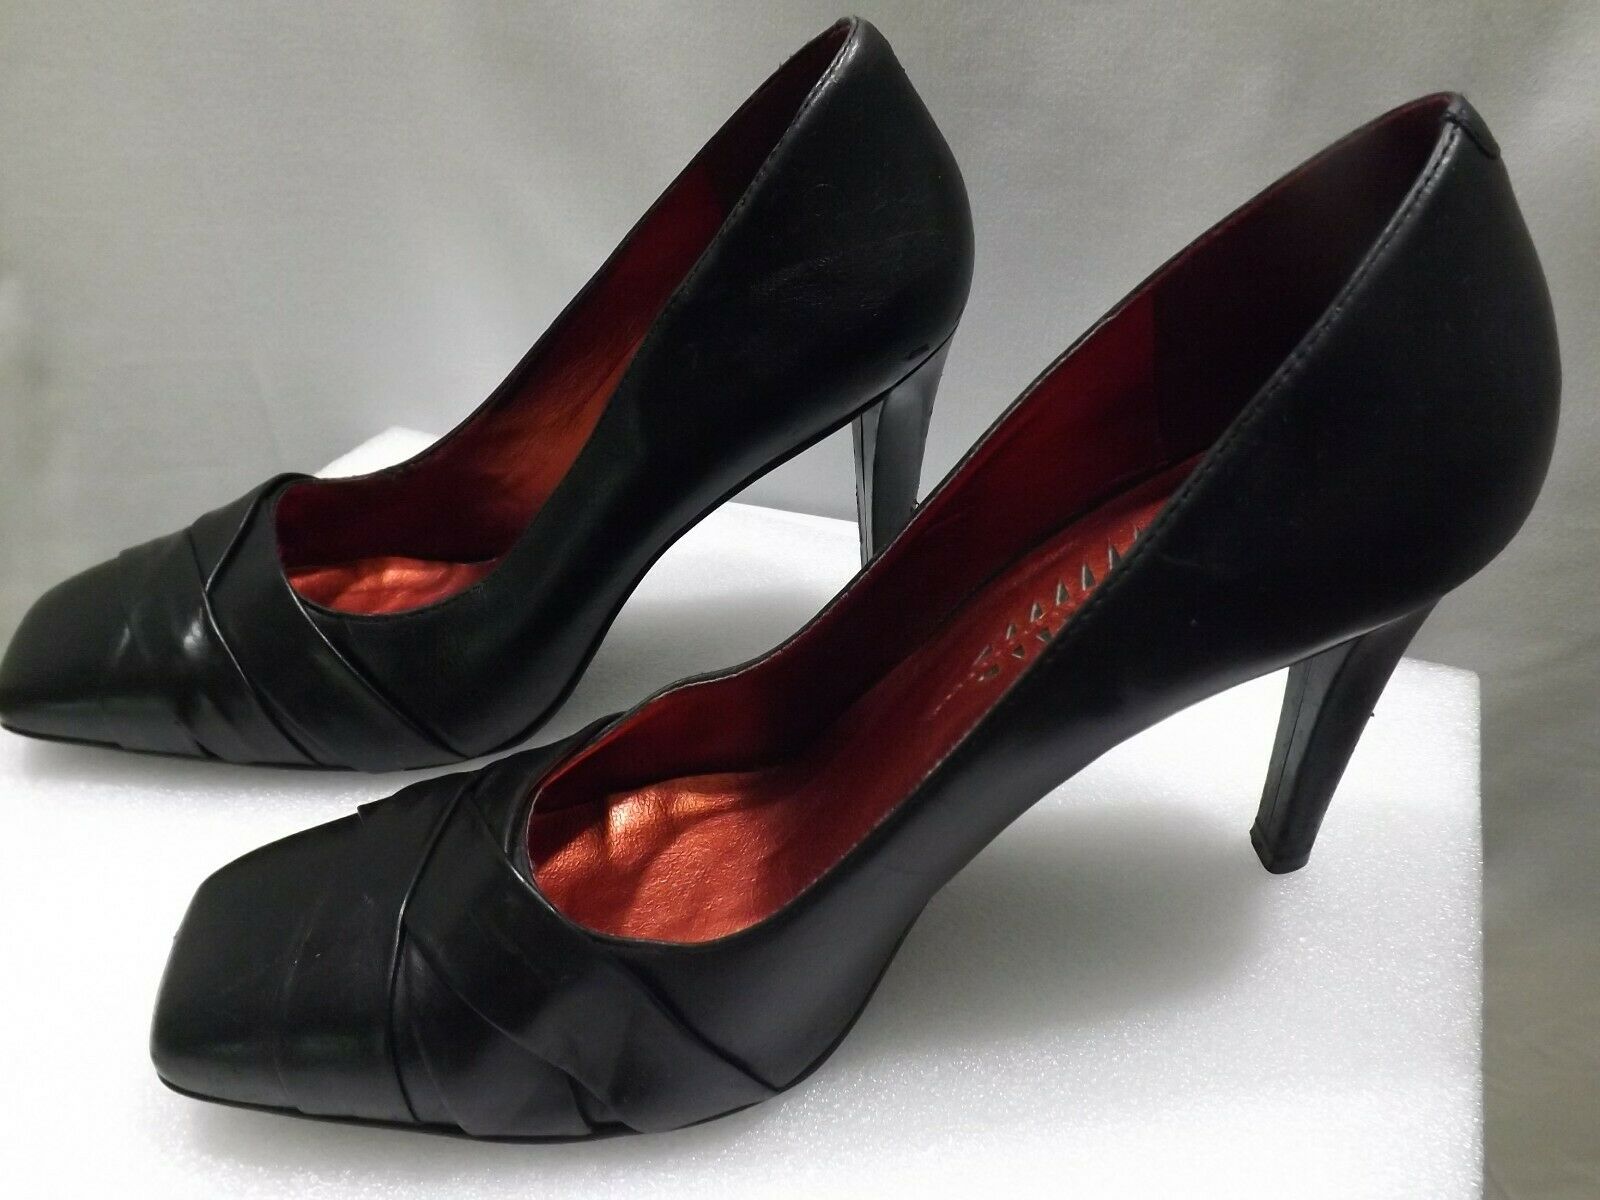 Shoes Women Black High Heels Dressy Solid Closed Toe Stiletto Pump Sexy Slip on